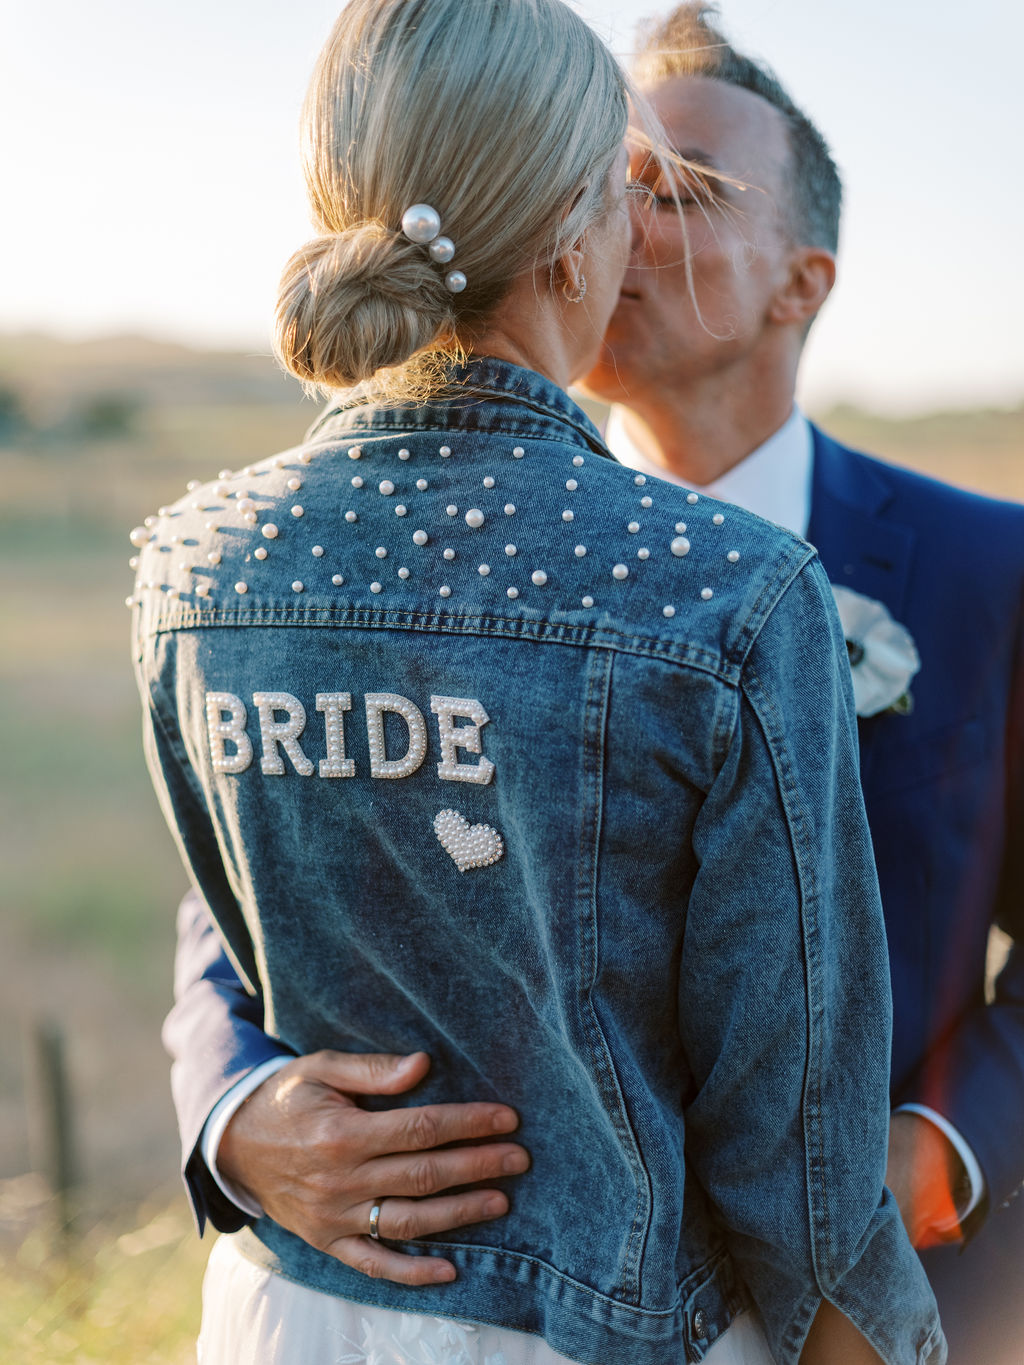 Bedazzled bride jean jacket 